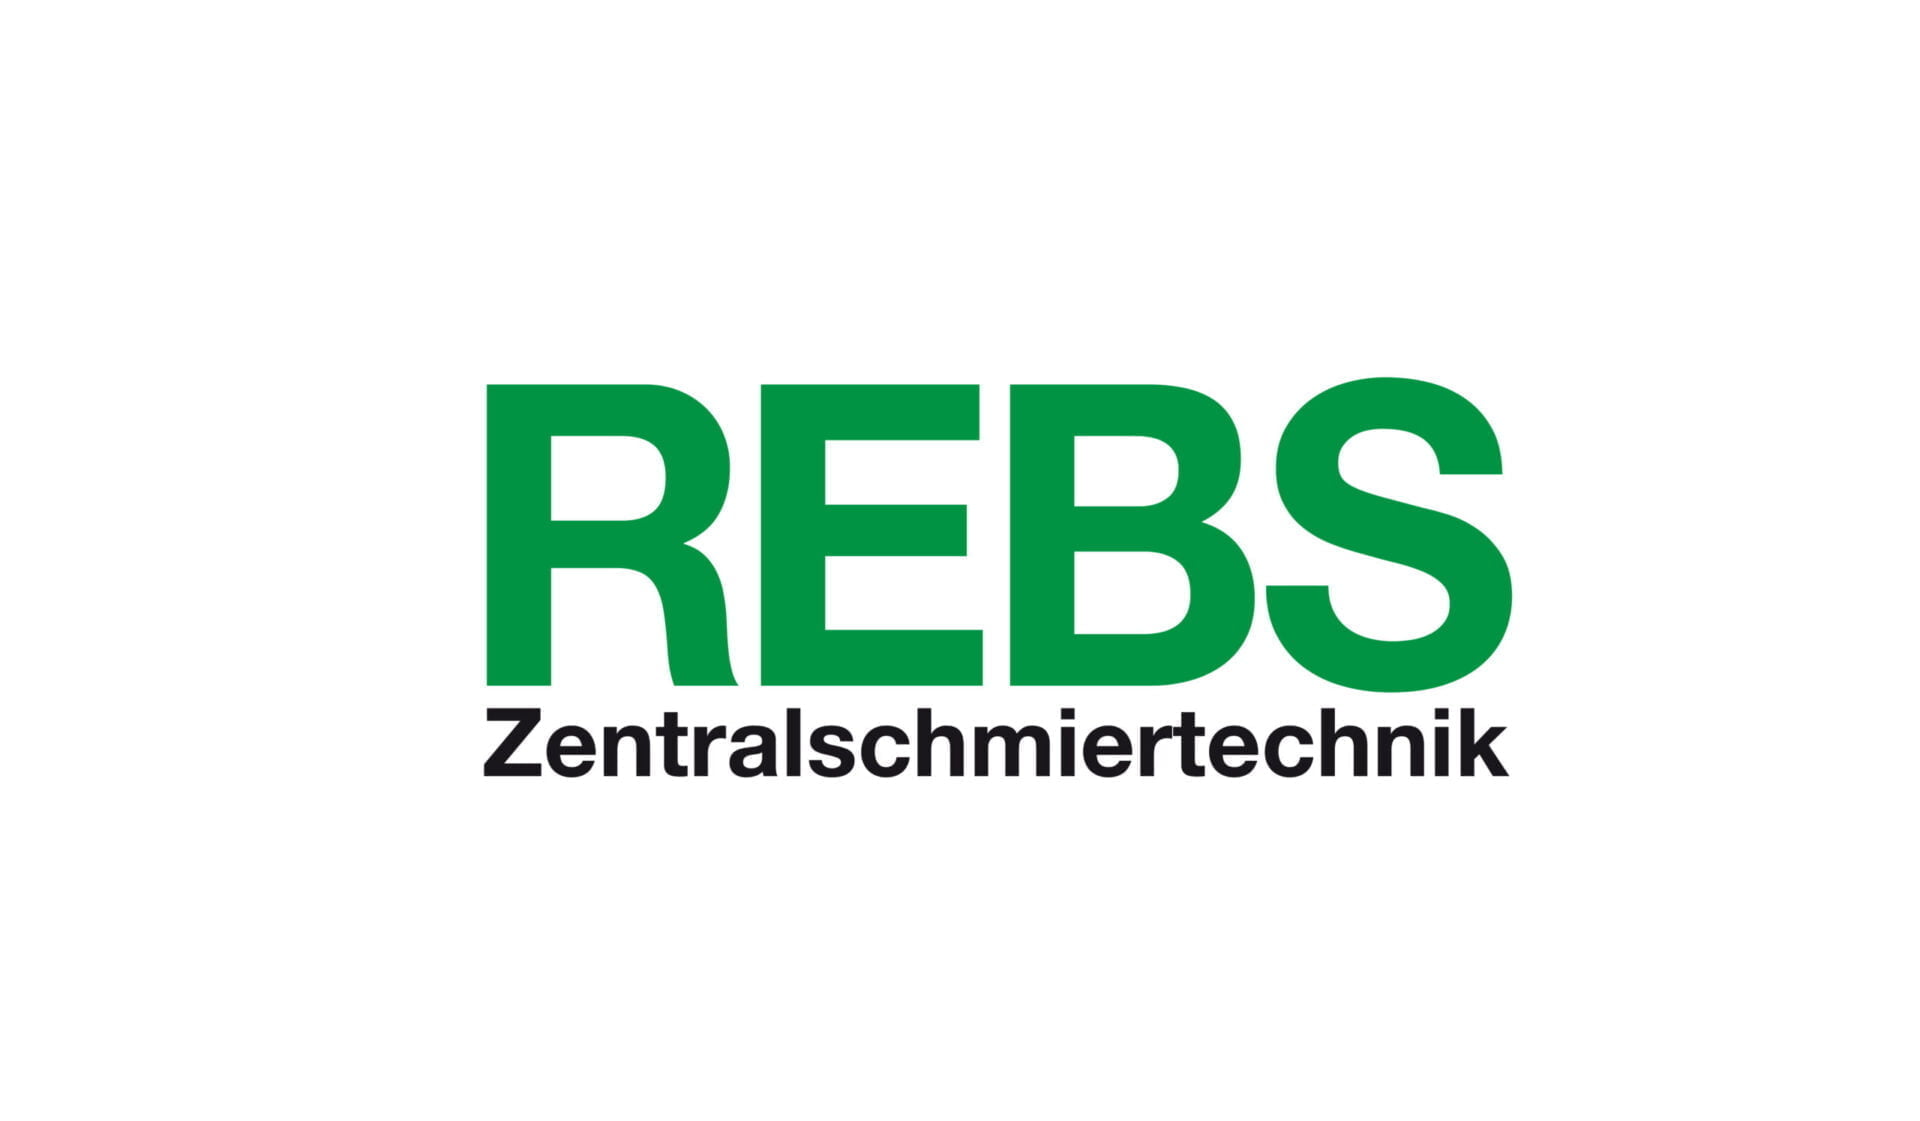 REBS Zentralschmiertechnik logo in green and black text